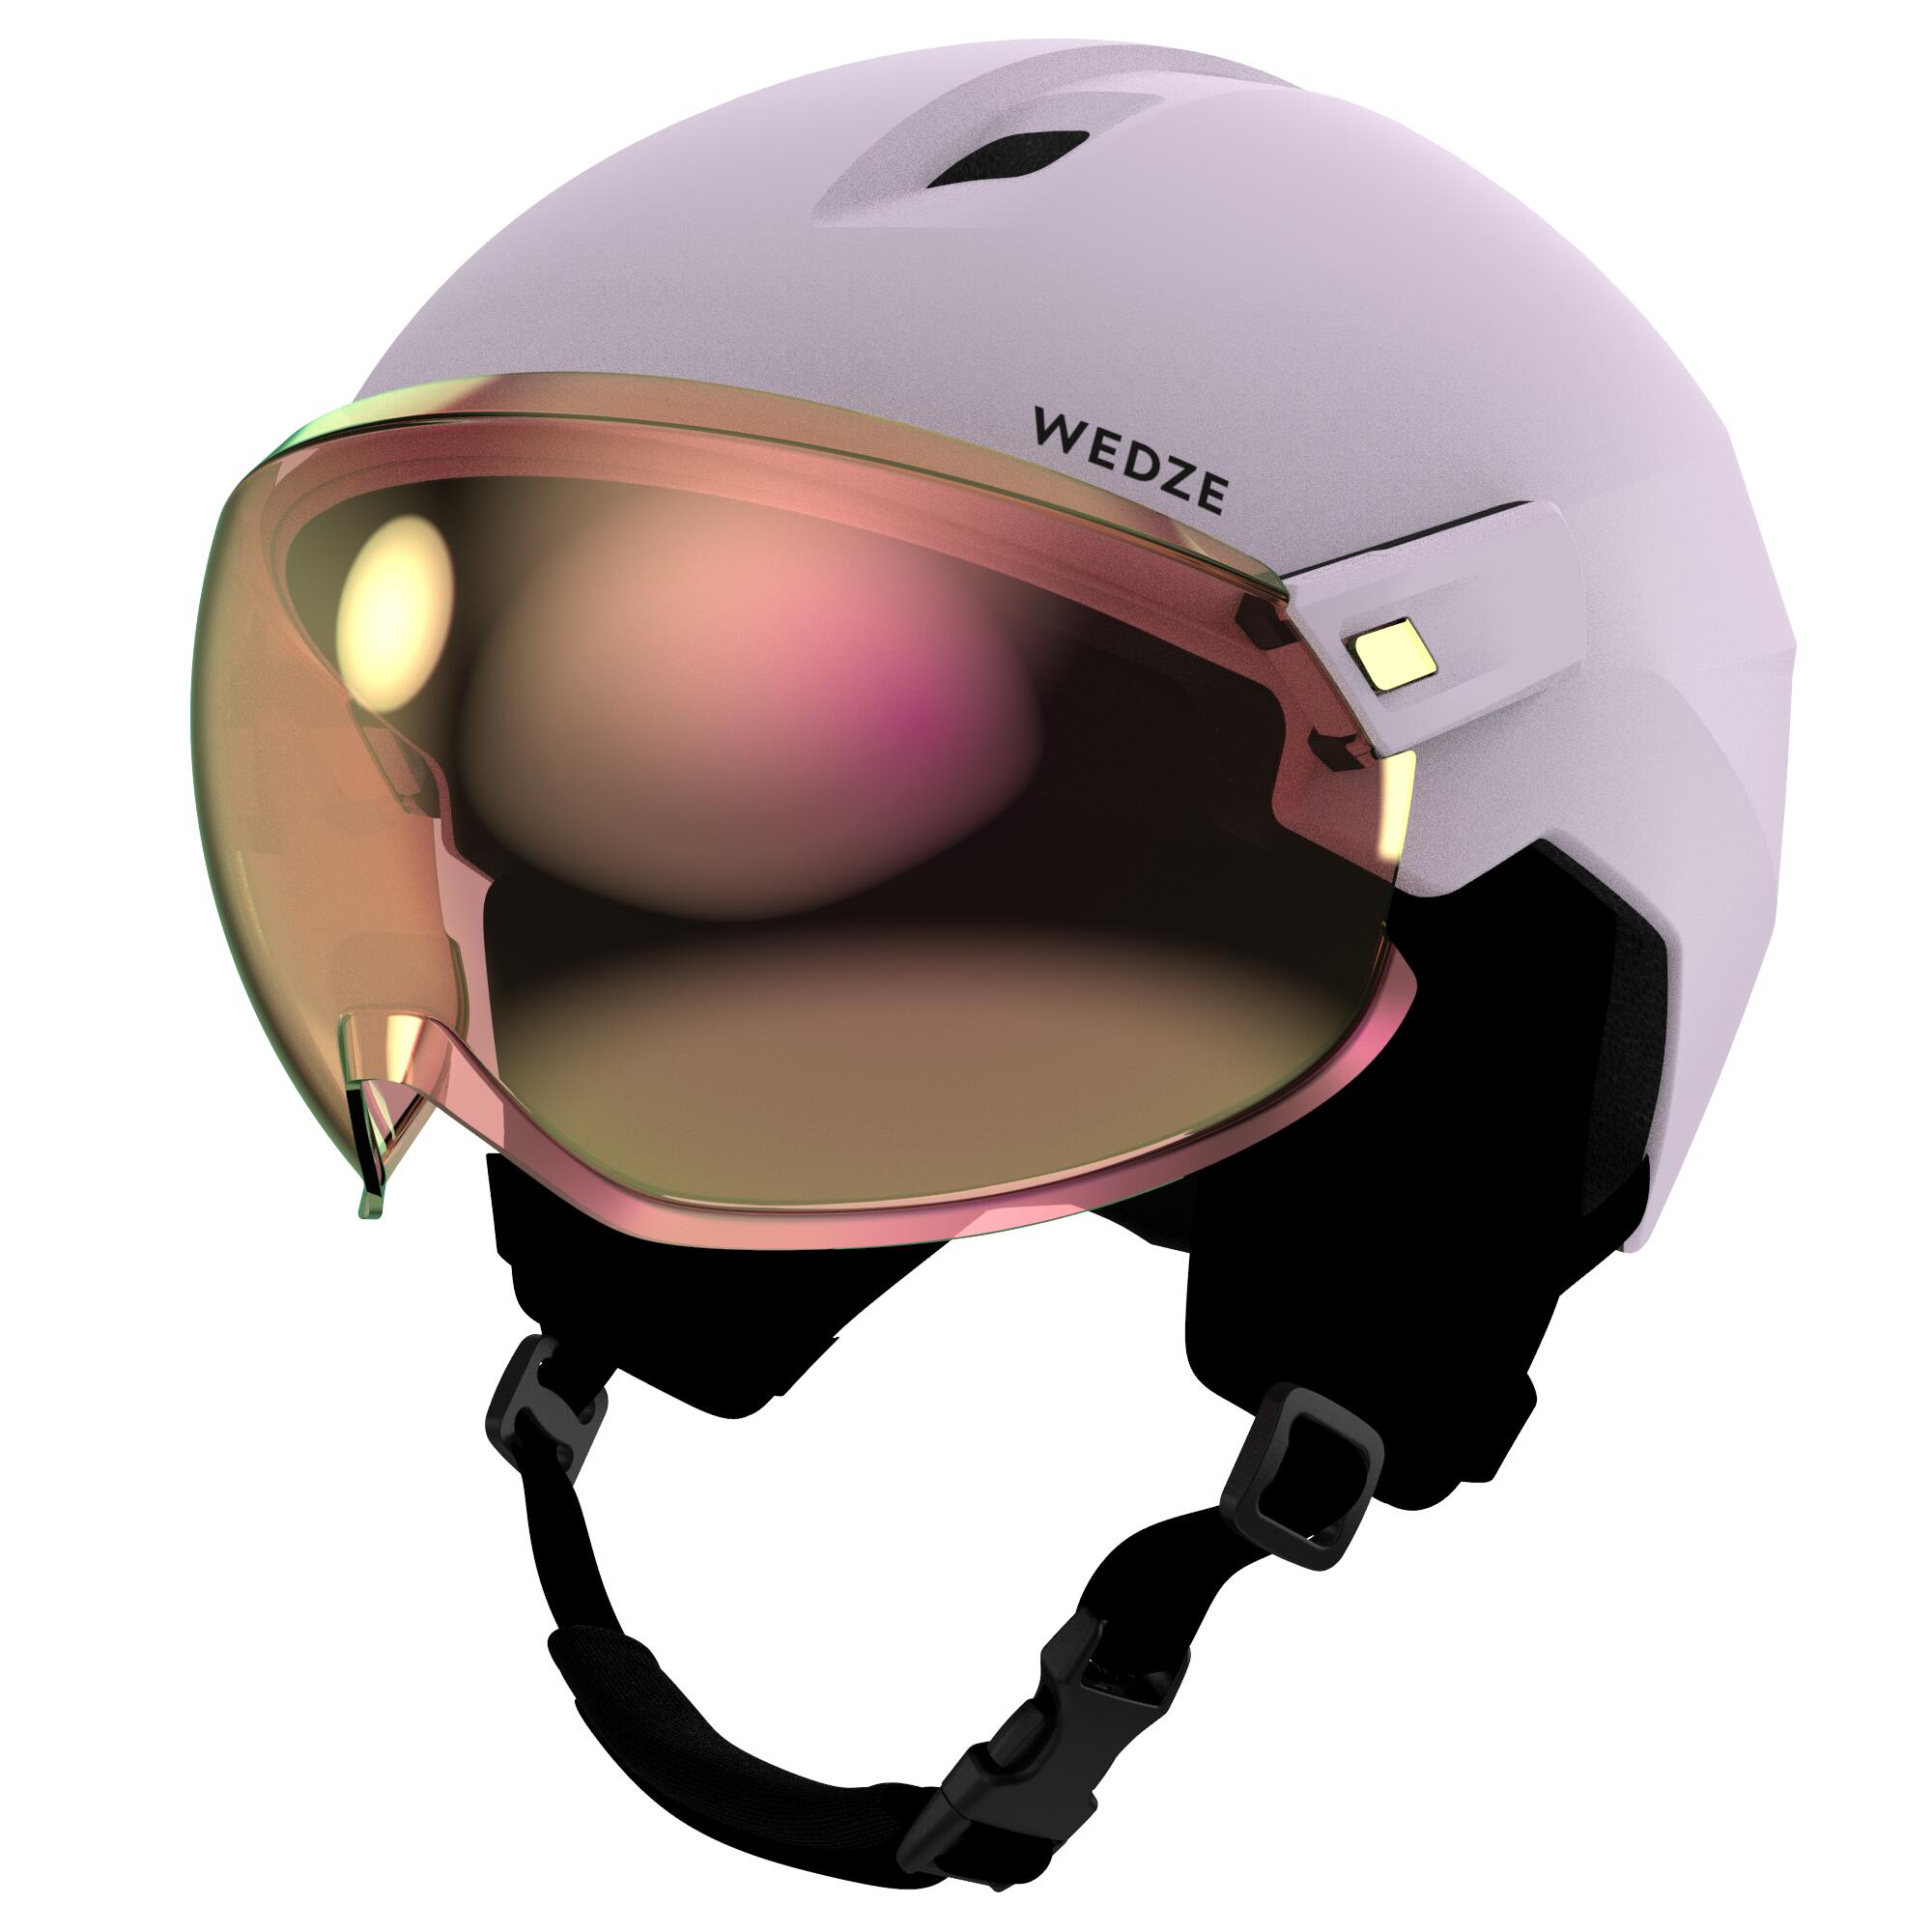 WEDZE Adult Ski Helmet with Visor - PST 550 - Lilac